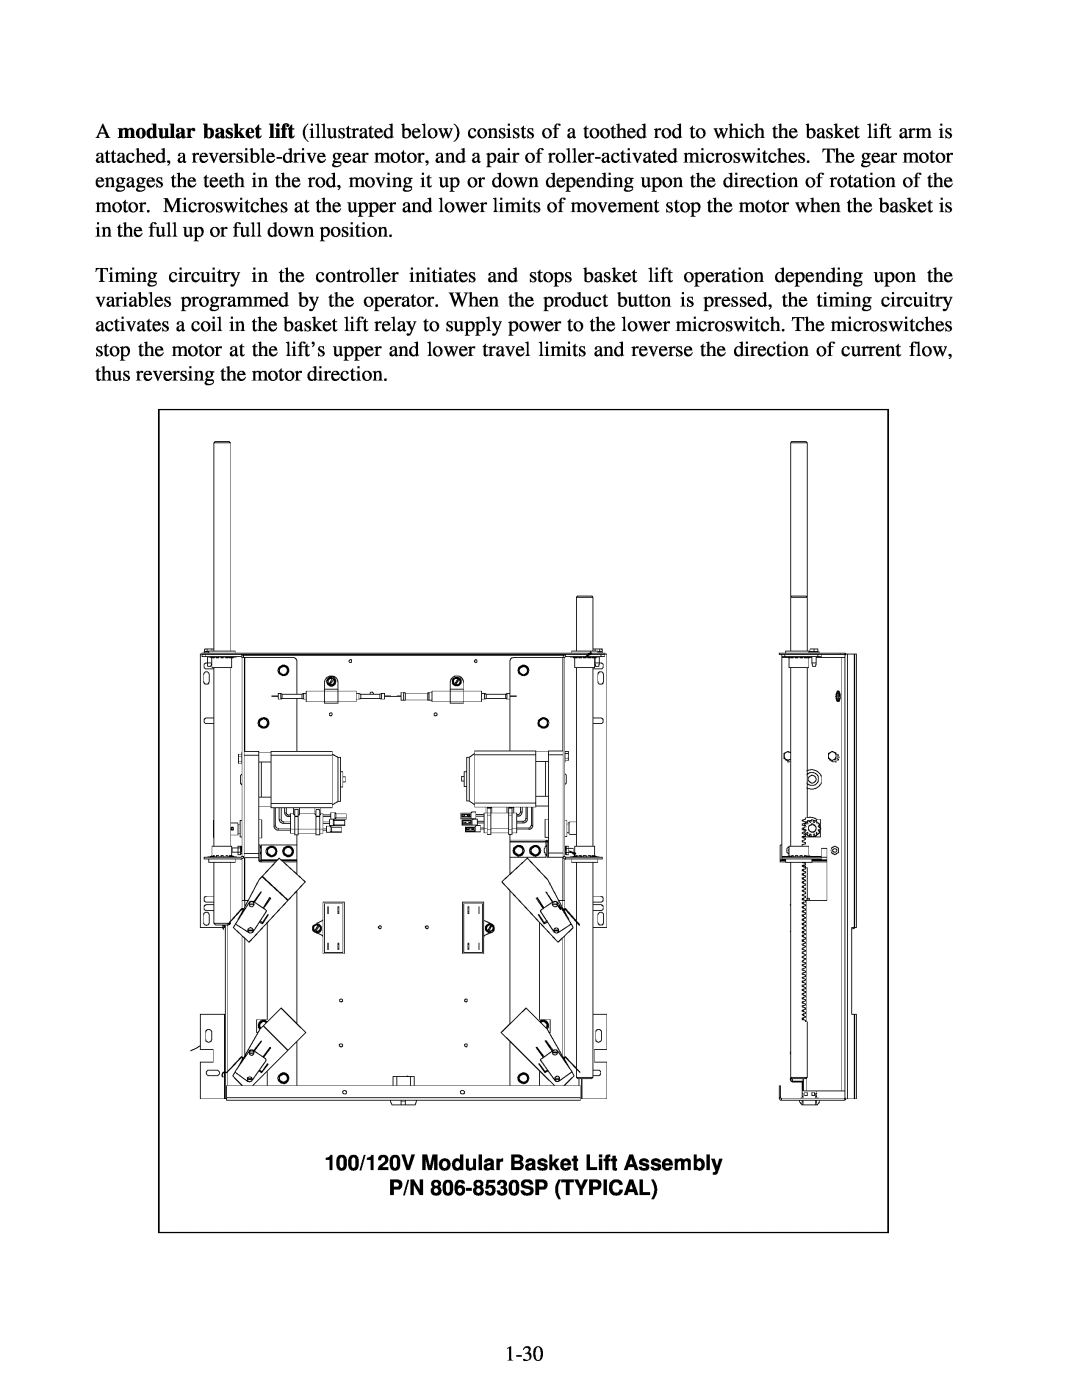 Frymaster H50 Series manual 100/120V Modular Basket Lift Assembly, P/N 806-8530SPTYPICAL 